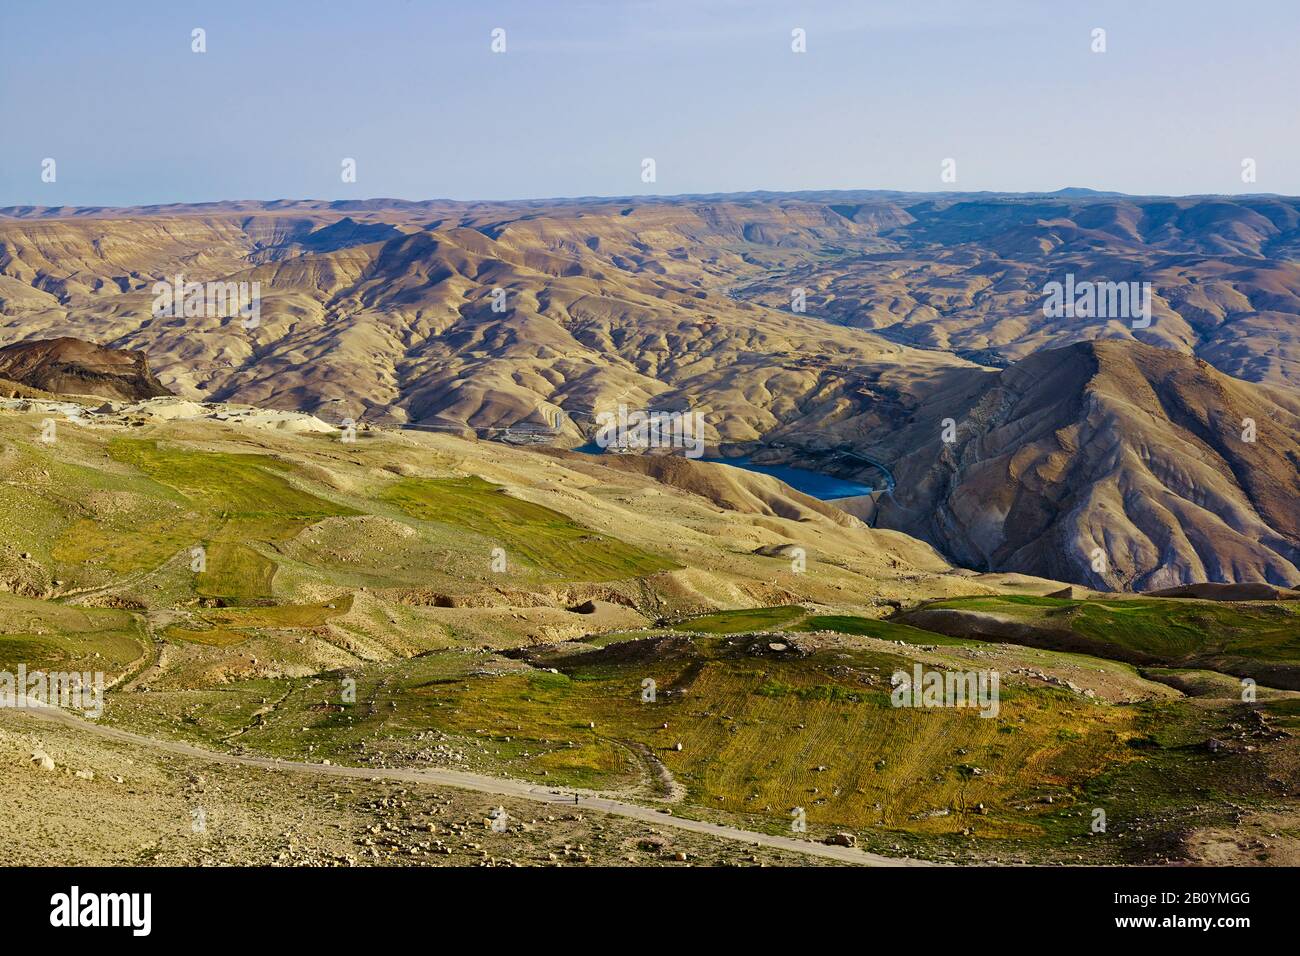 Wadi al Hasa with Tannur Dam, Karak / Tafila Province, Jordan, Middle East  Stock Photo - Alamy